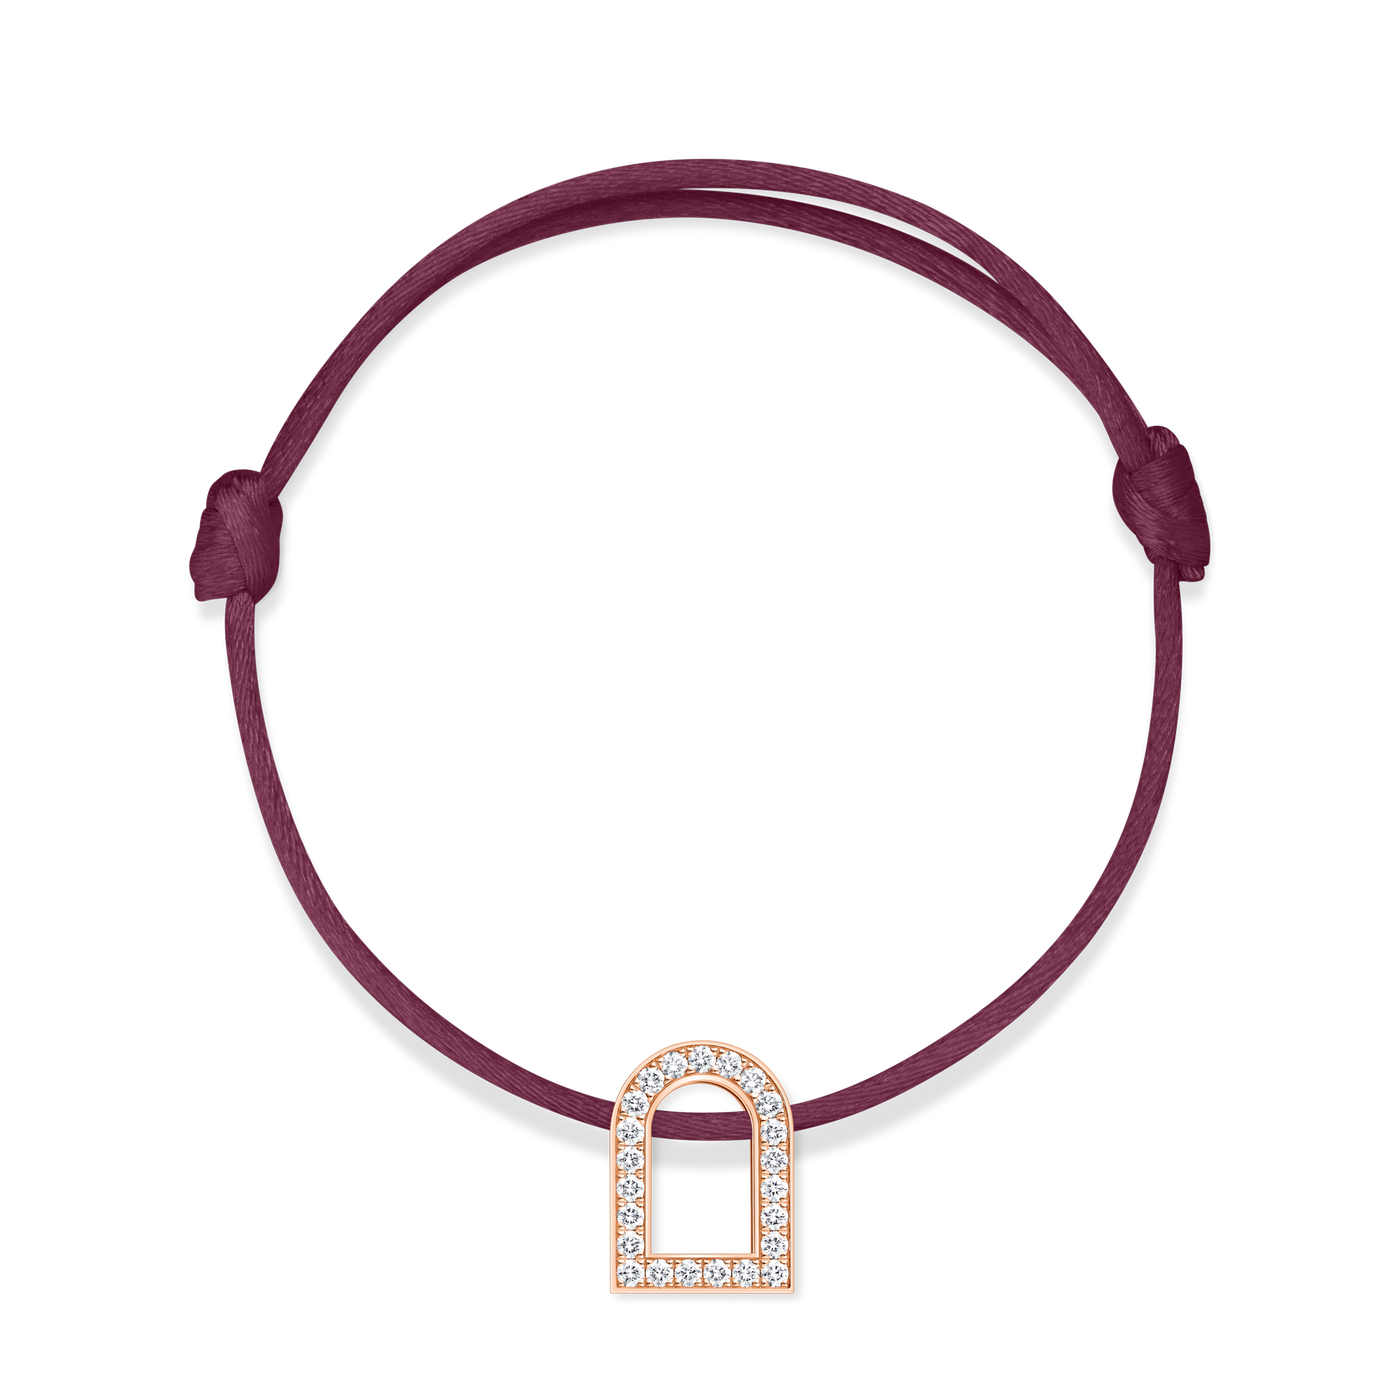 L'Arc Voyage Charm GM, 18k Rose Gold with Galerie Diamonds on Silk Cord Bracelet - DAVIDOR